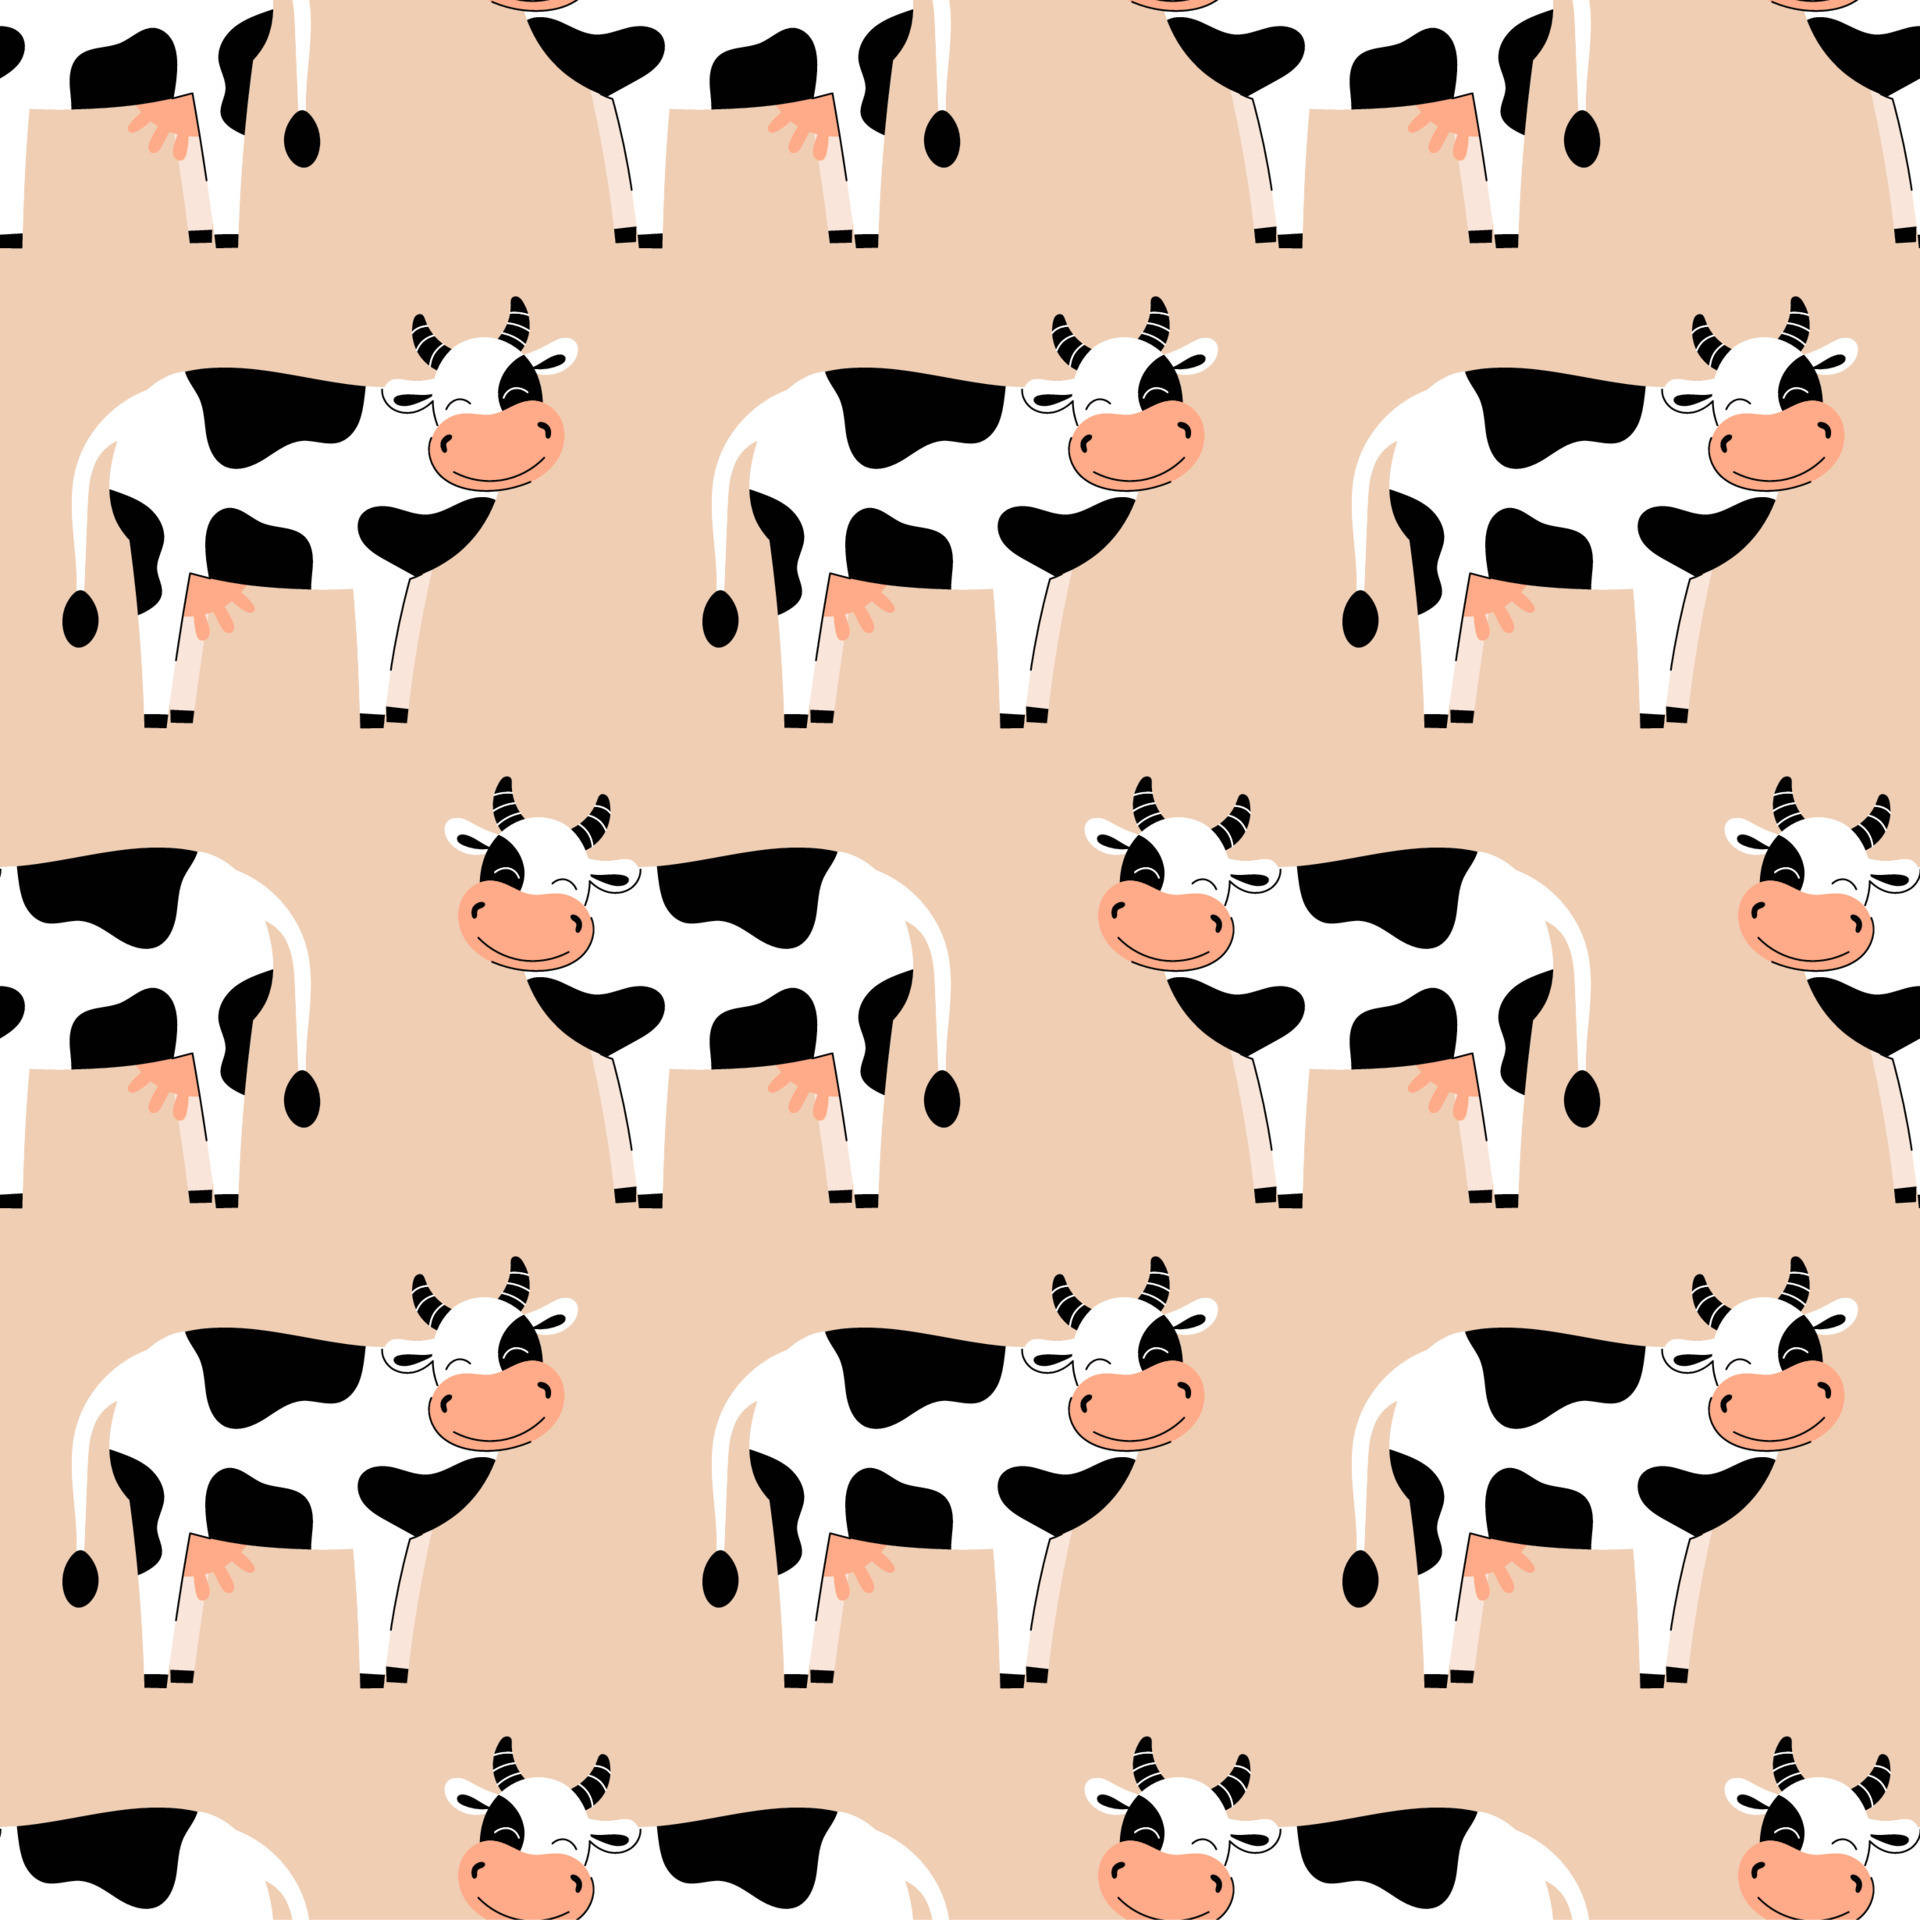 Enjoyable Digital Art Of A Farm Animal Wallpaper